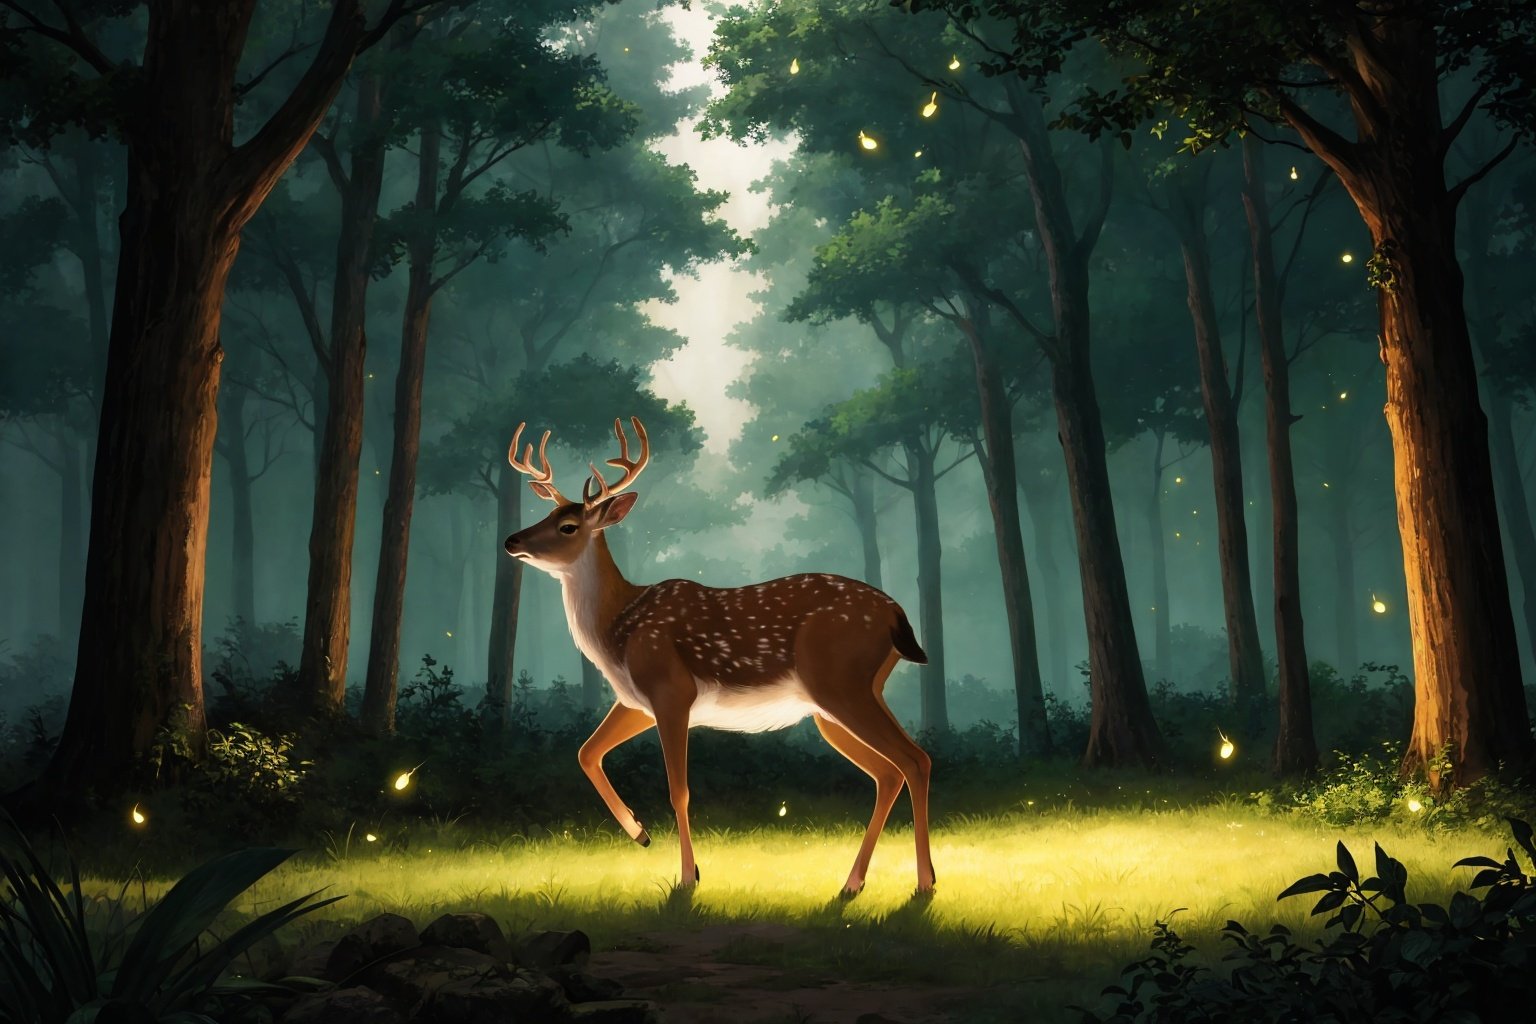 masterpiece, best quality, darkness, fireflies, forest, deer